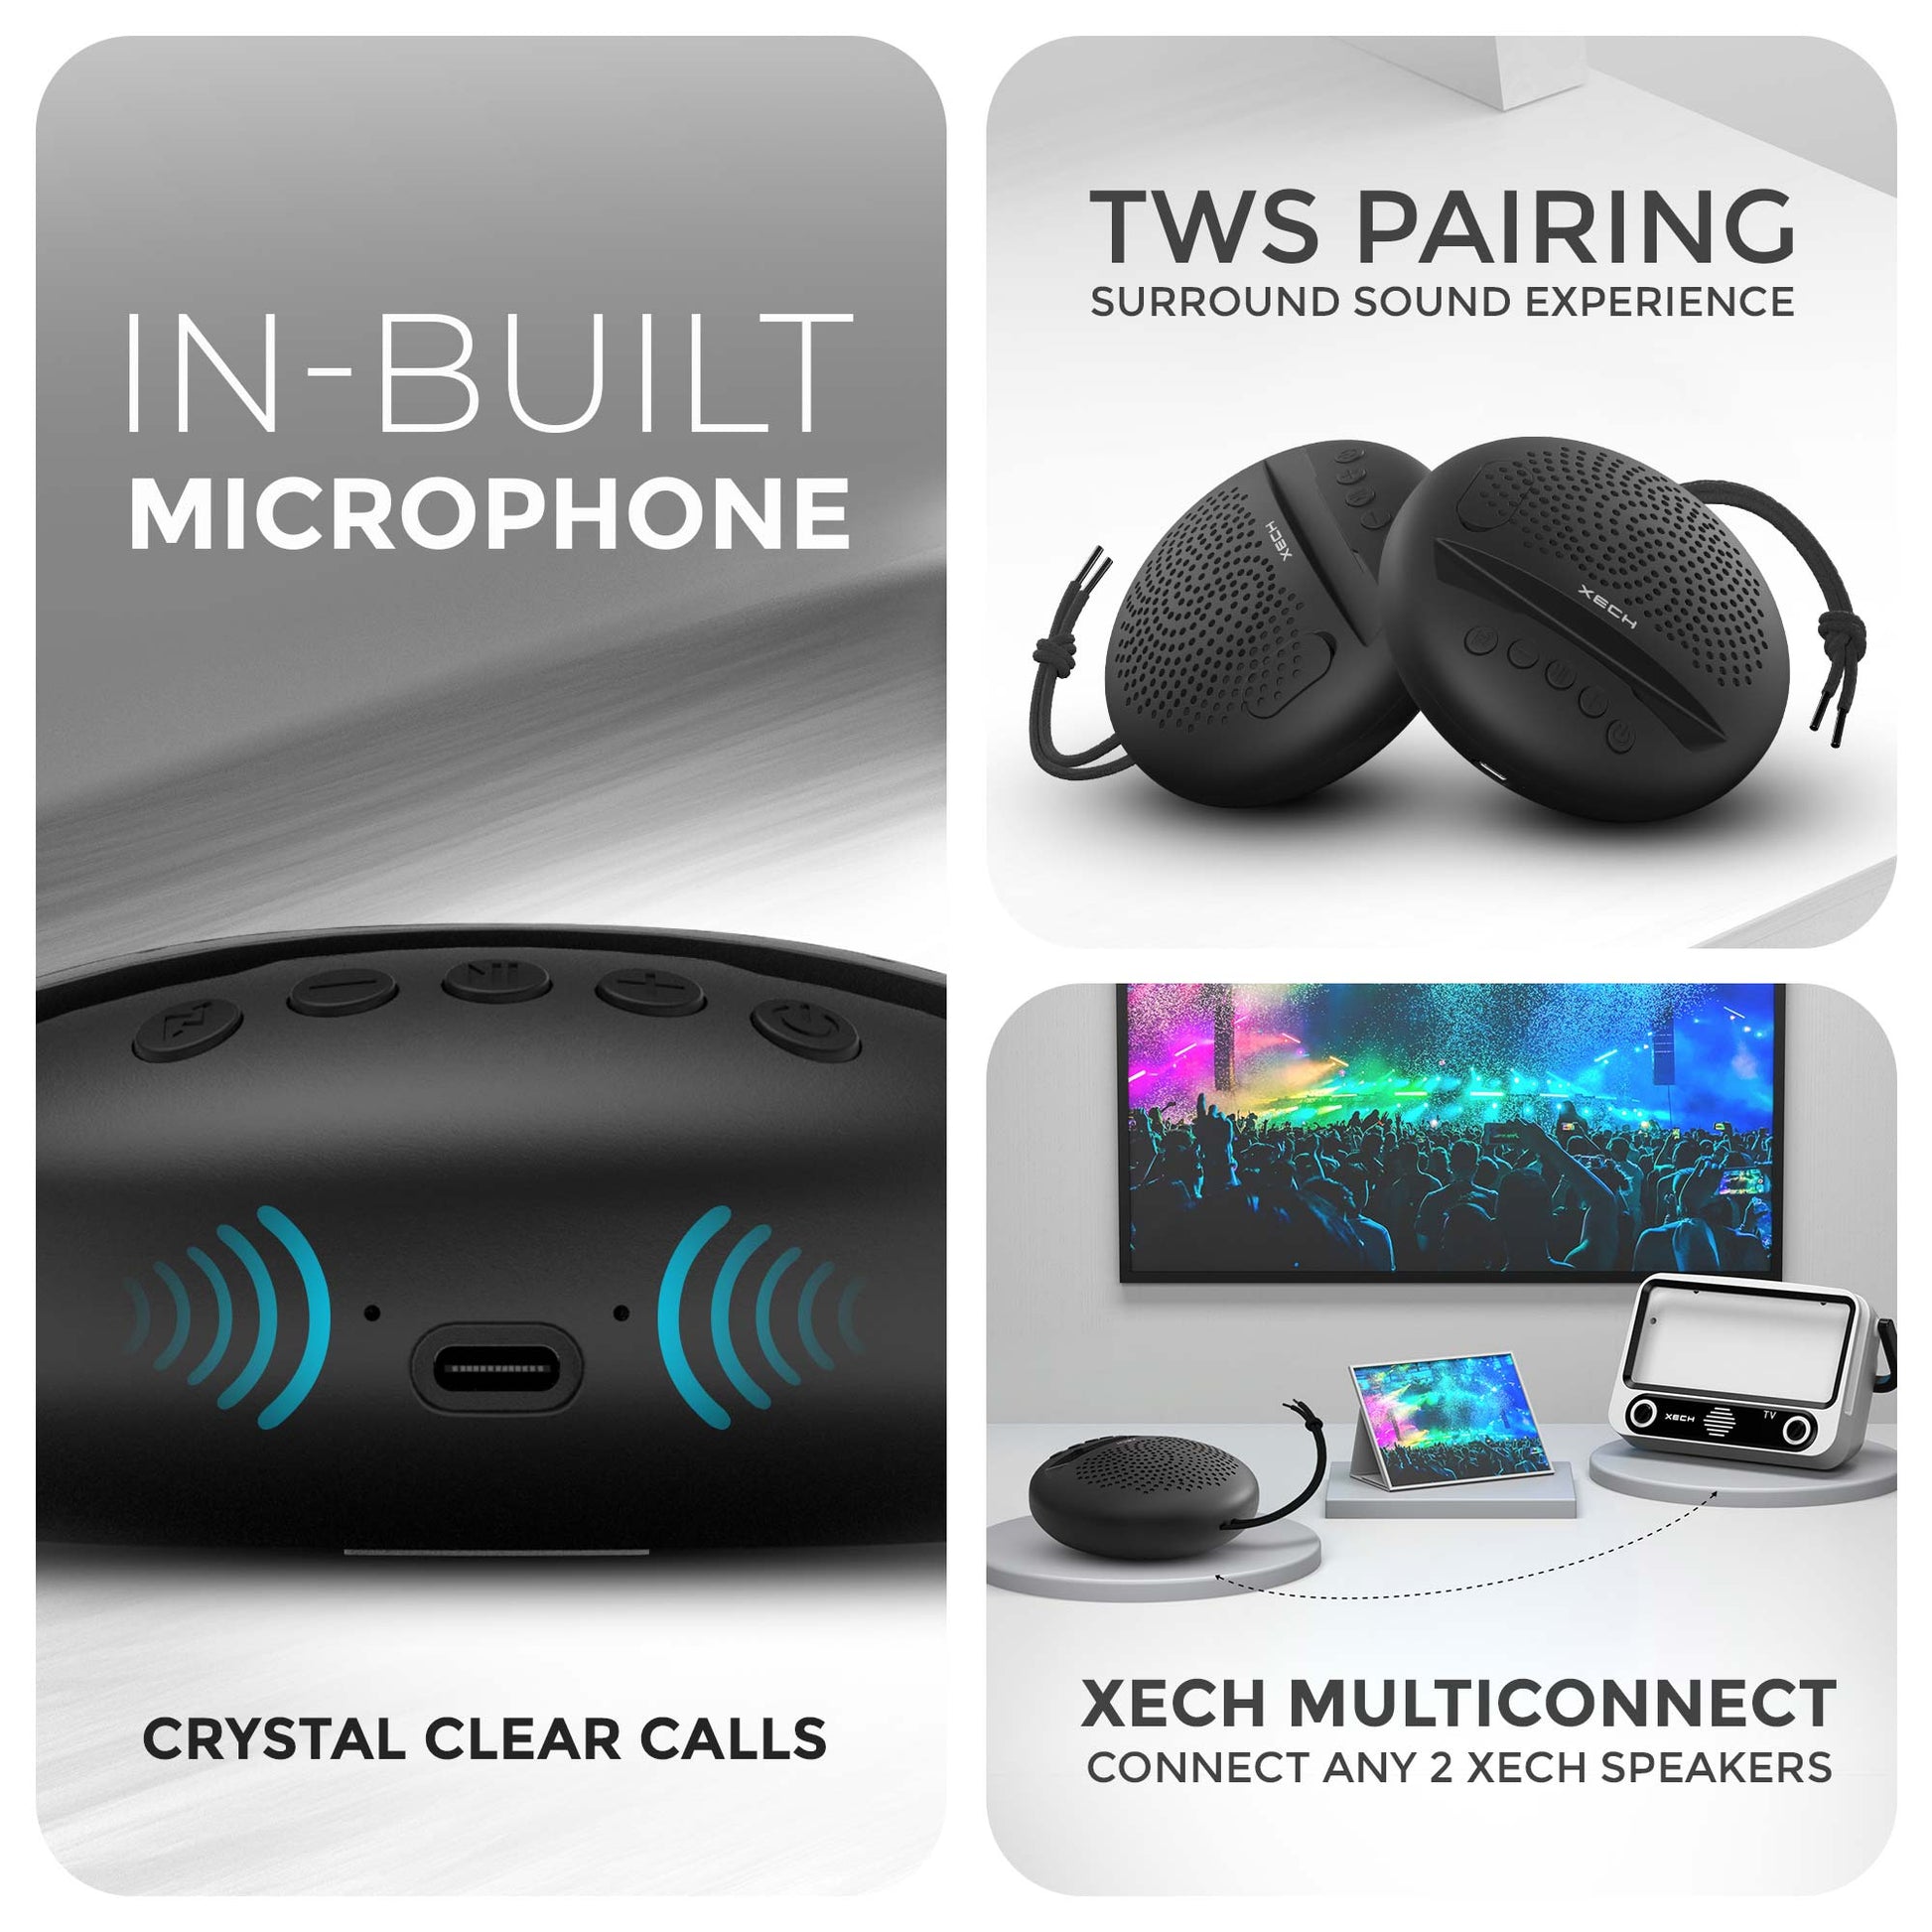 XECH Bluetooth speakers – TWS wireless audio excellence.